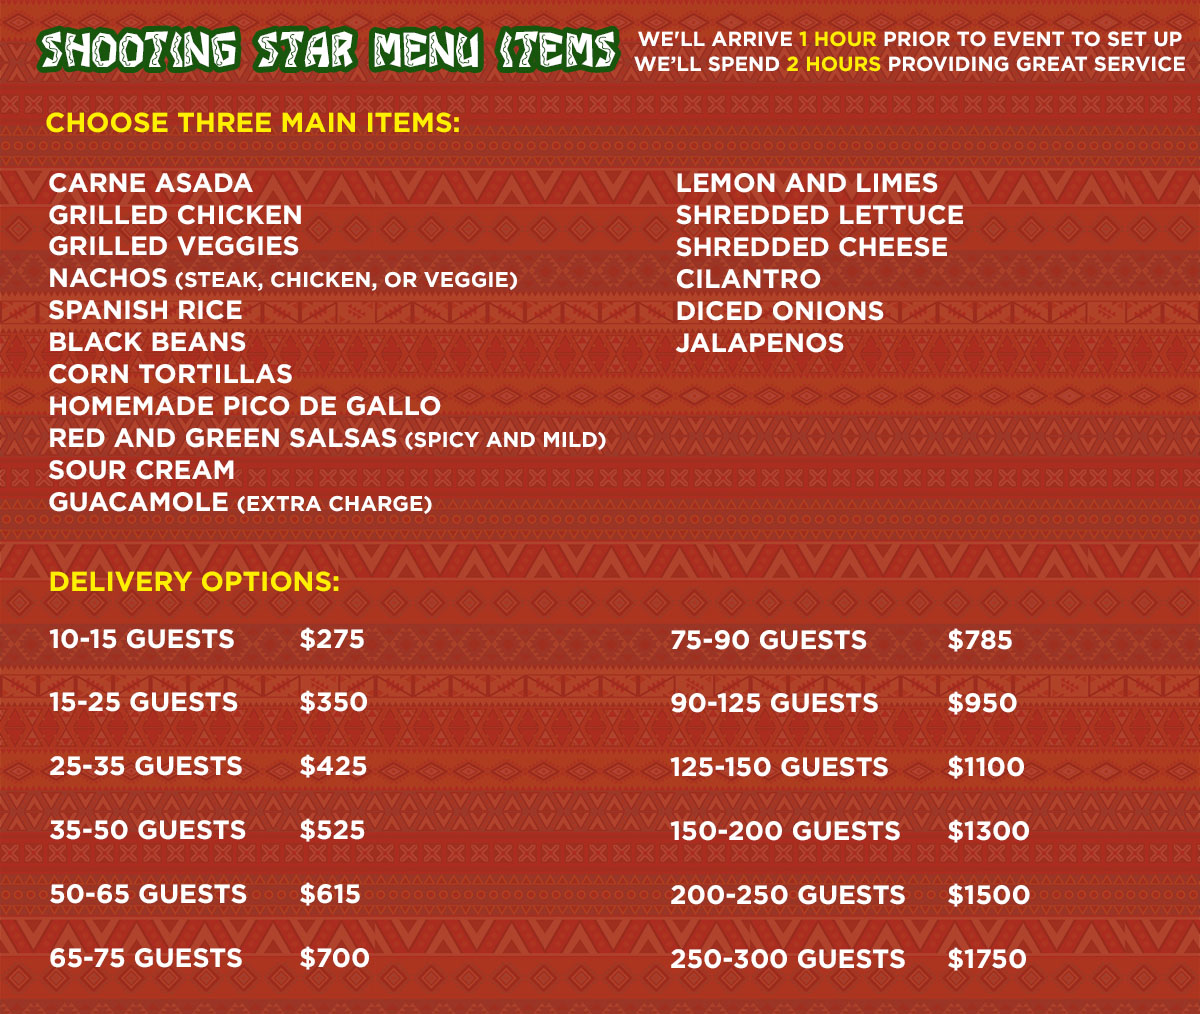 bt-menus-shootingstar